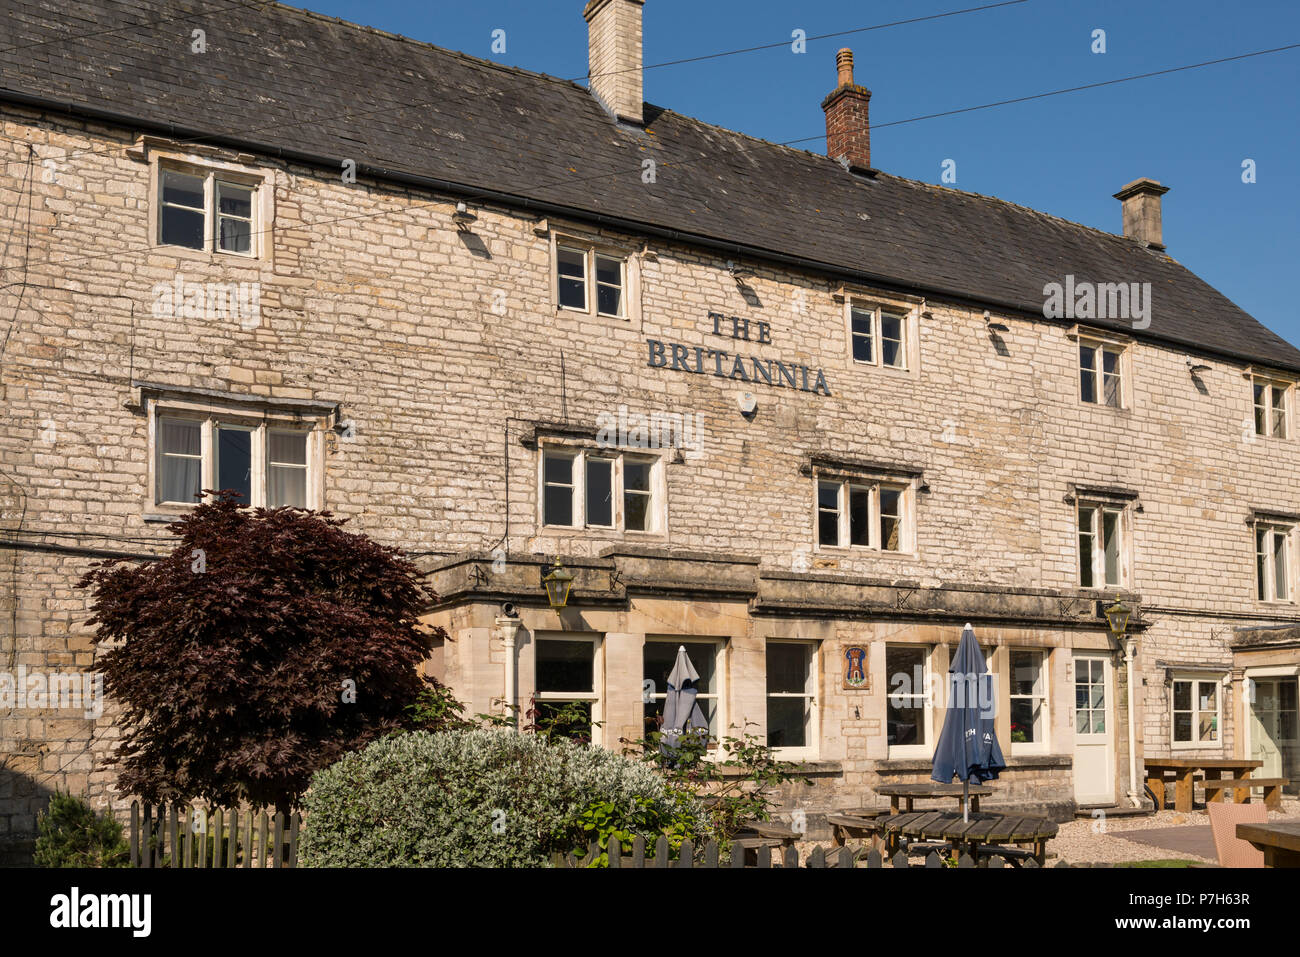 The Britannia pub restaurant, Nailsworth, Gloucestershire, UK Stock Photo